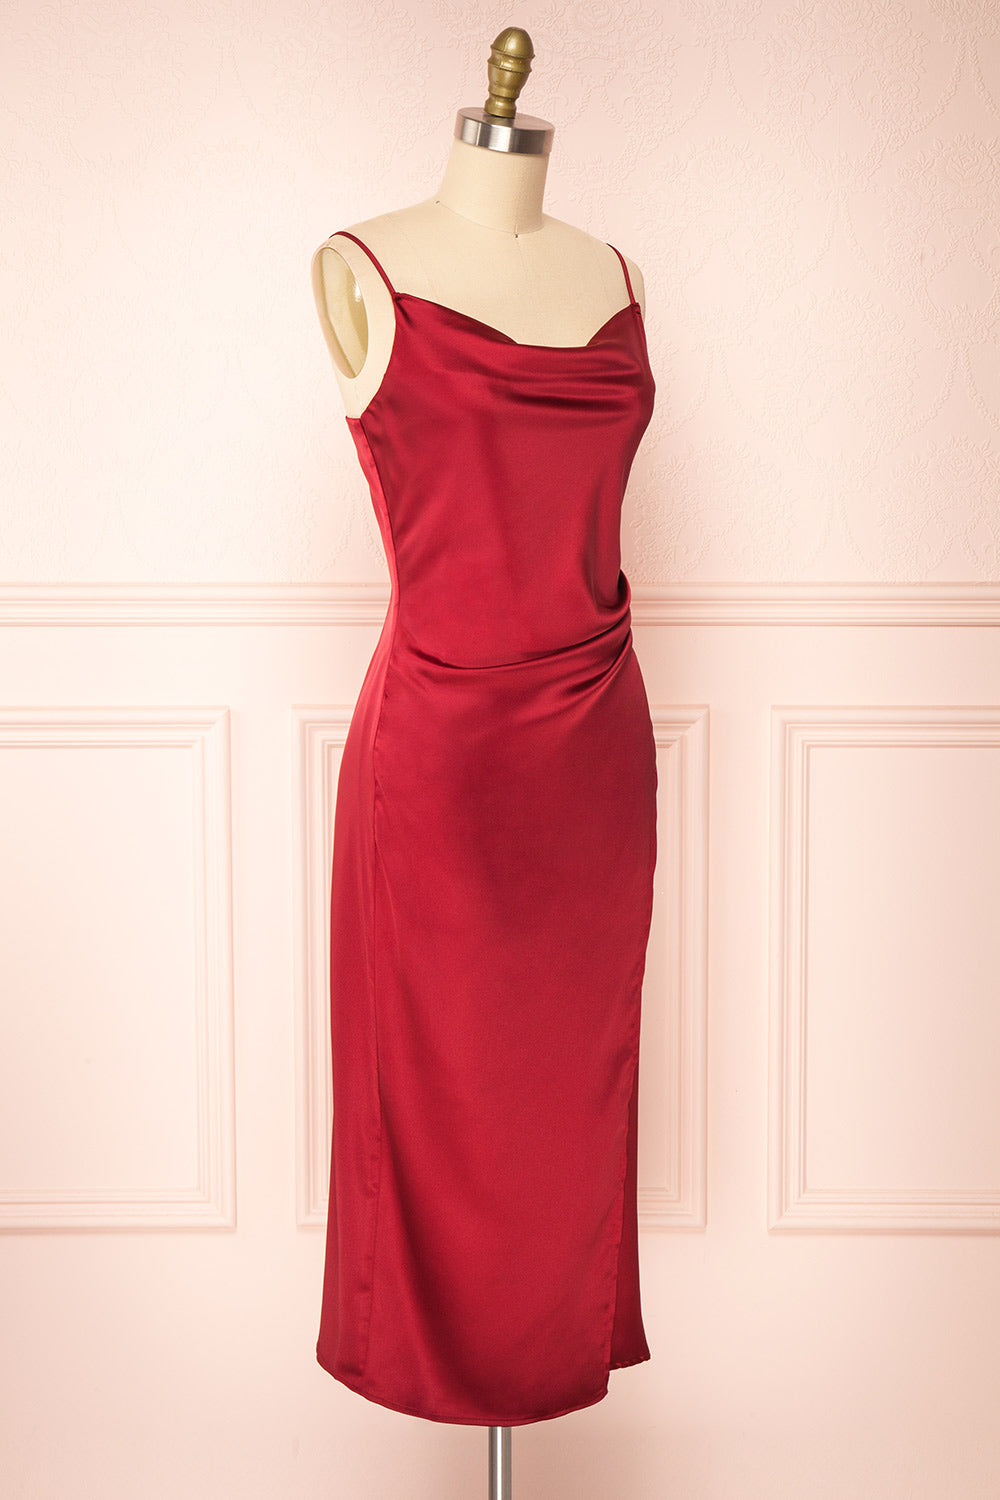 Chloe Wine Red Silky Midi Slip Dress | Boutique 1861 side view 